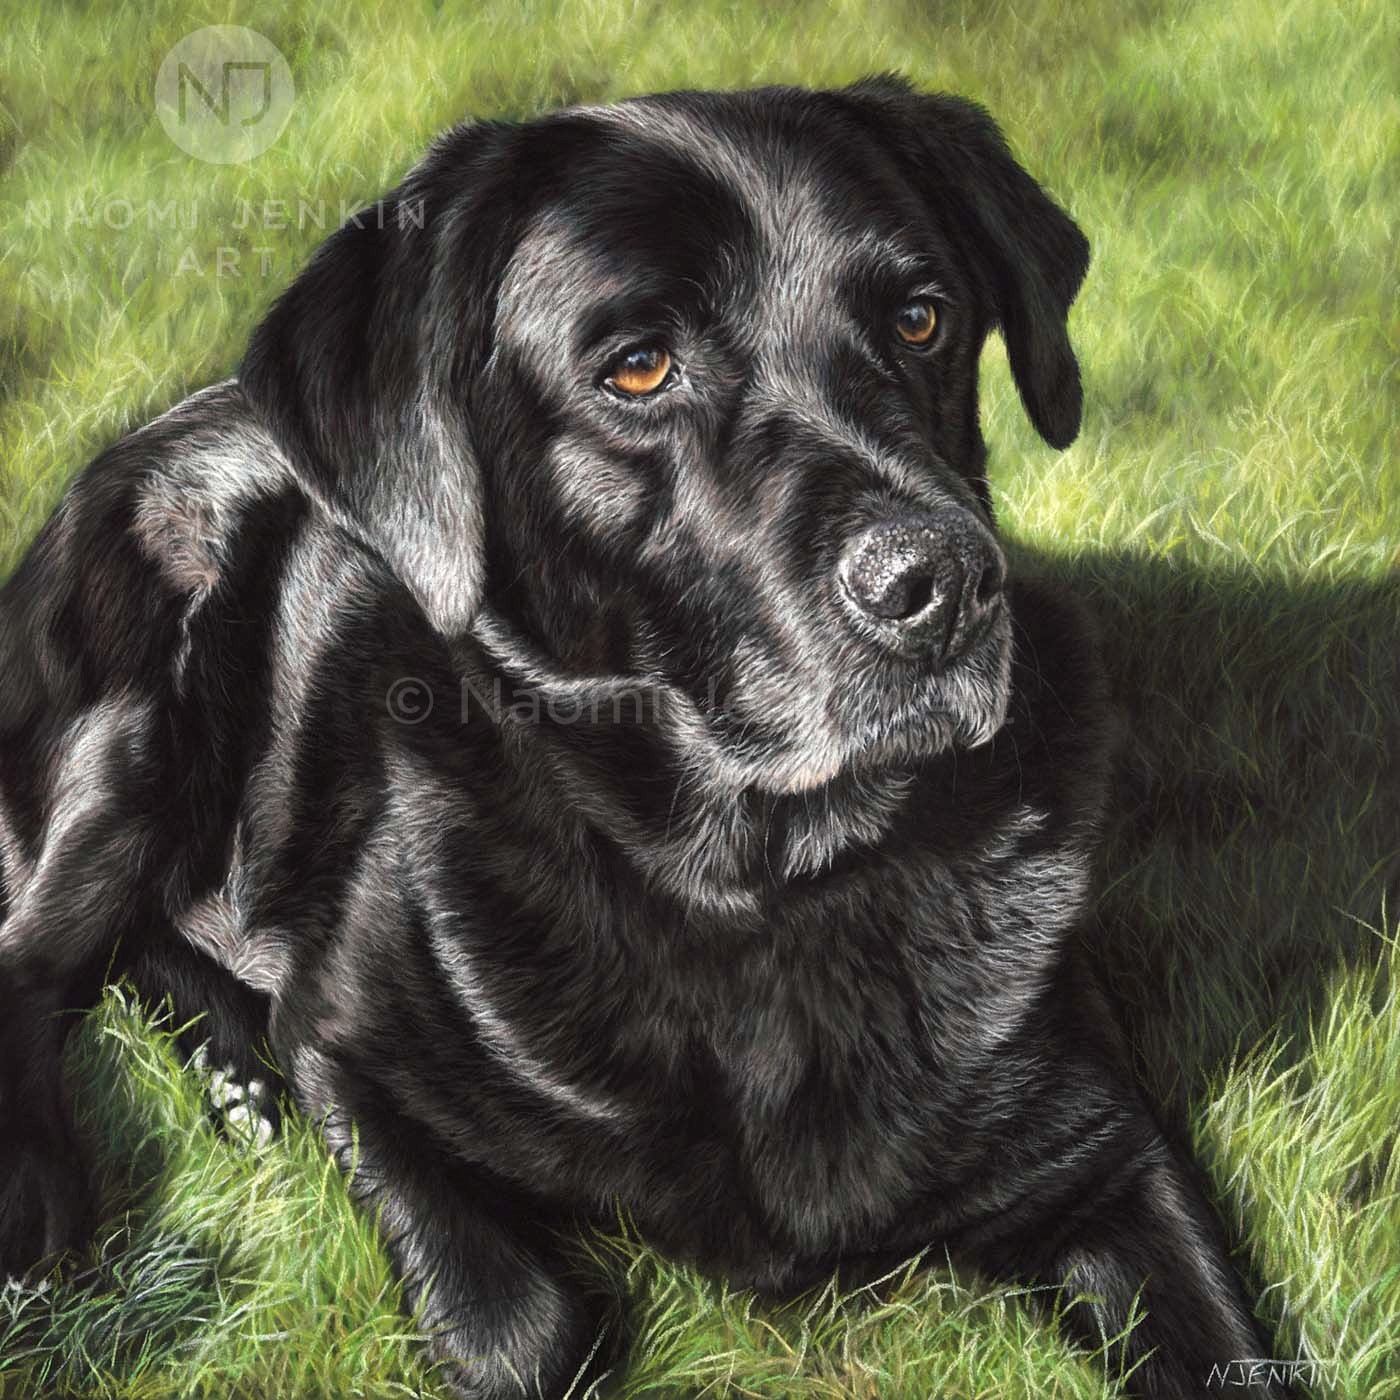 Black labrador portrait by dog portrait artist Naomi Jenkin. 